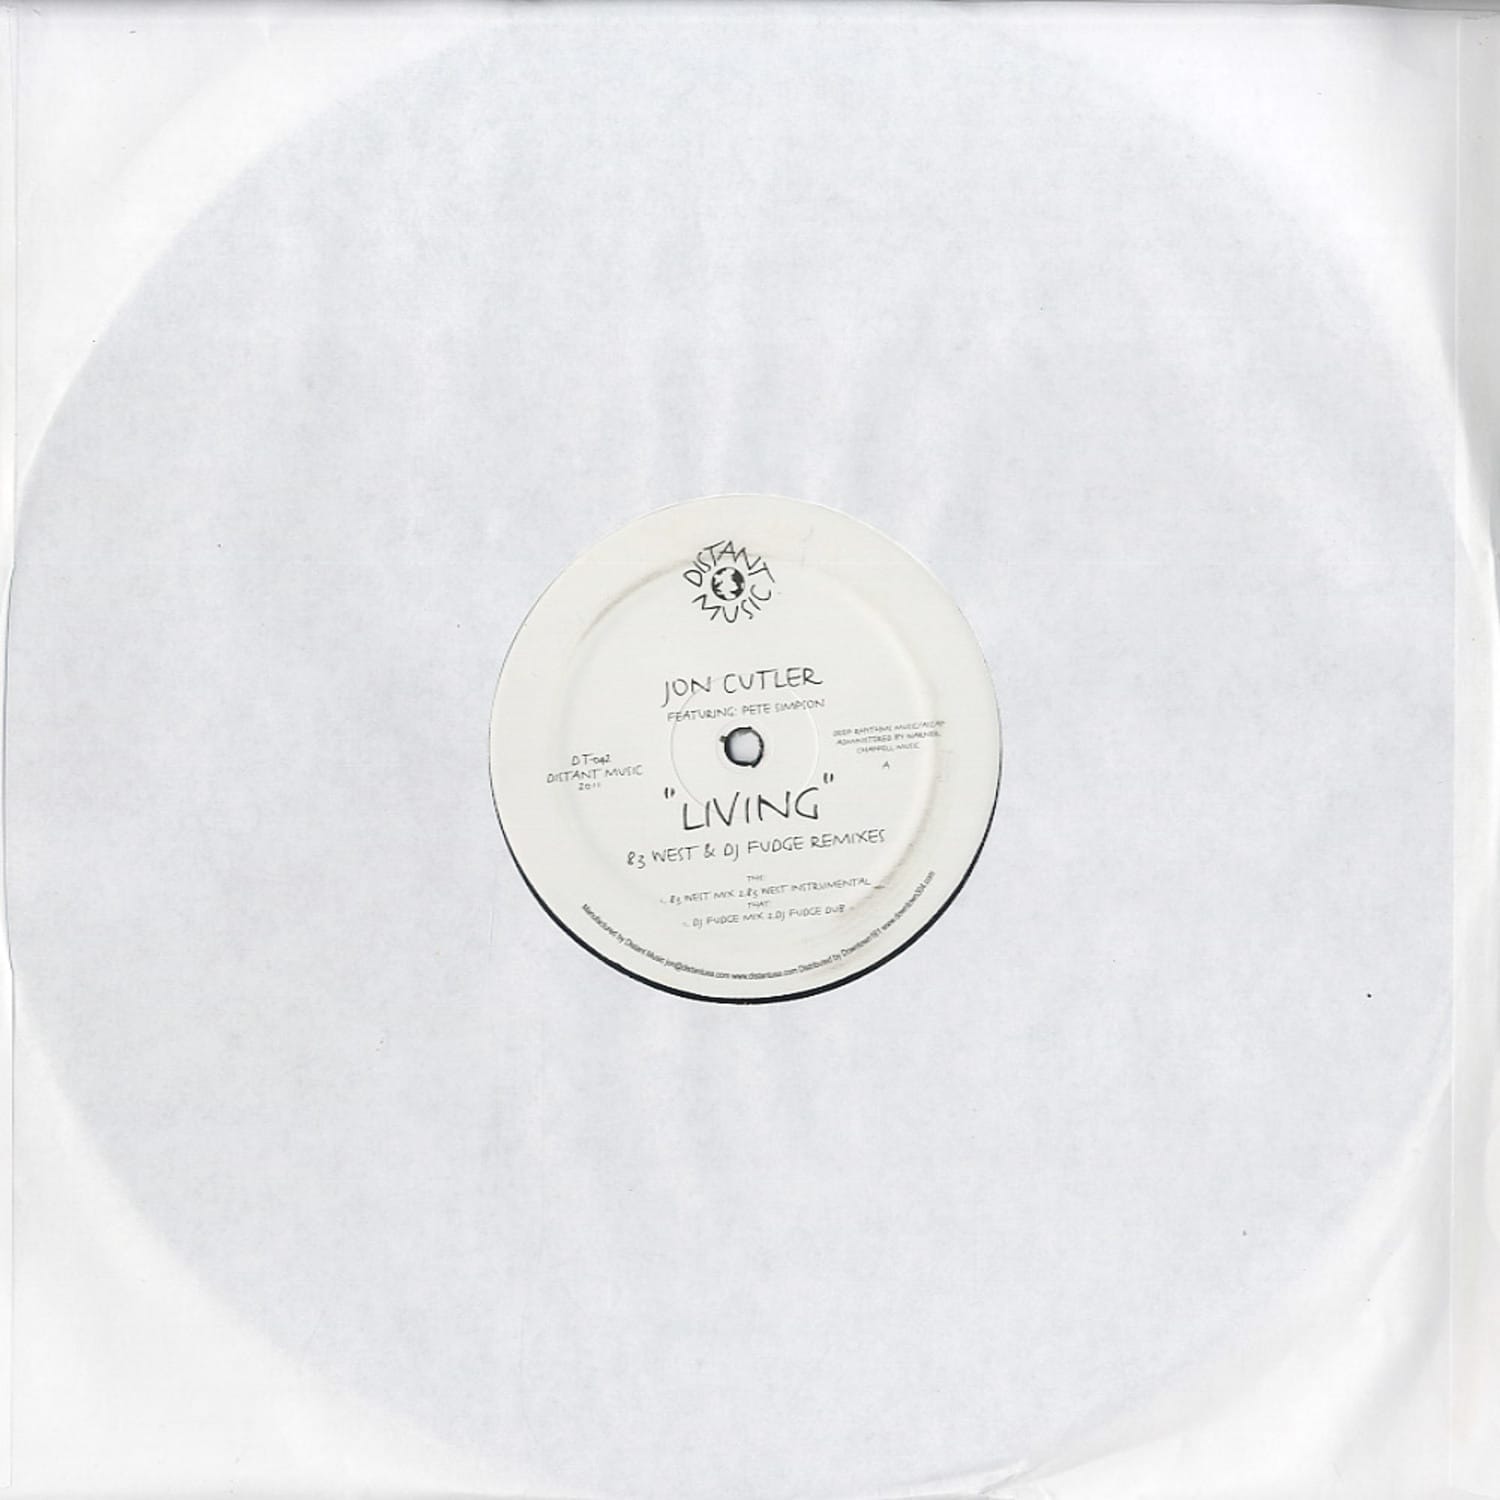 Jon Cutler - LIVING FEAT. PETE SIMPSON / 83 WEST & DJ FUDGE RMX